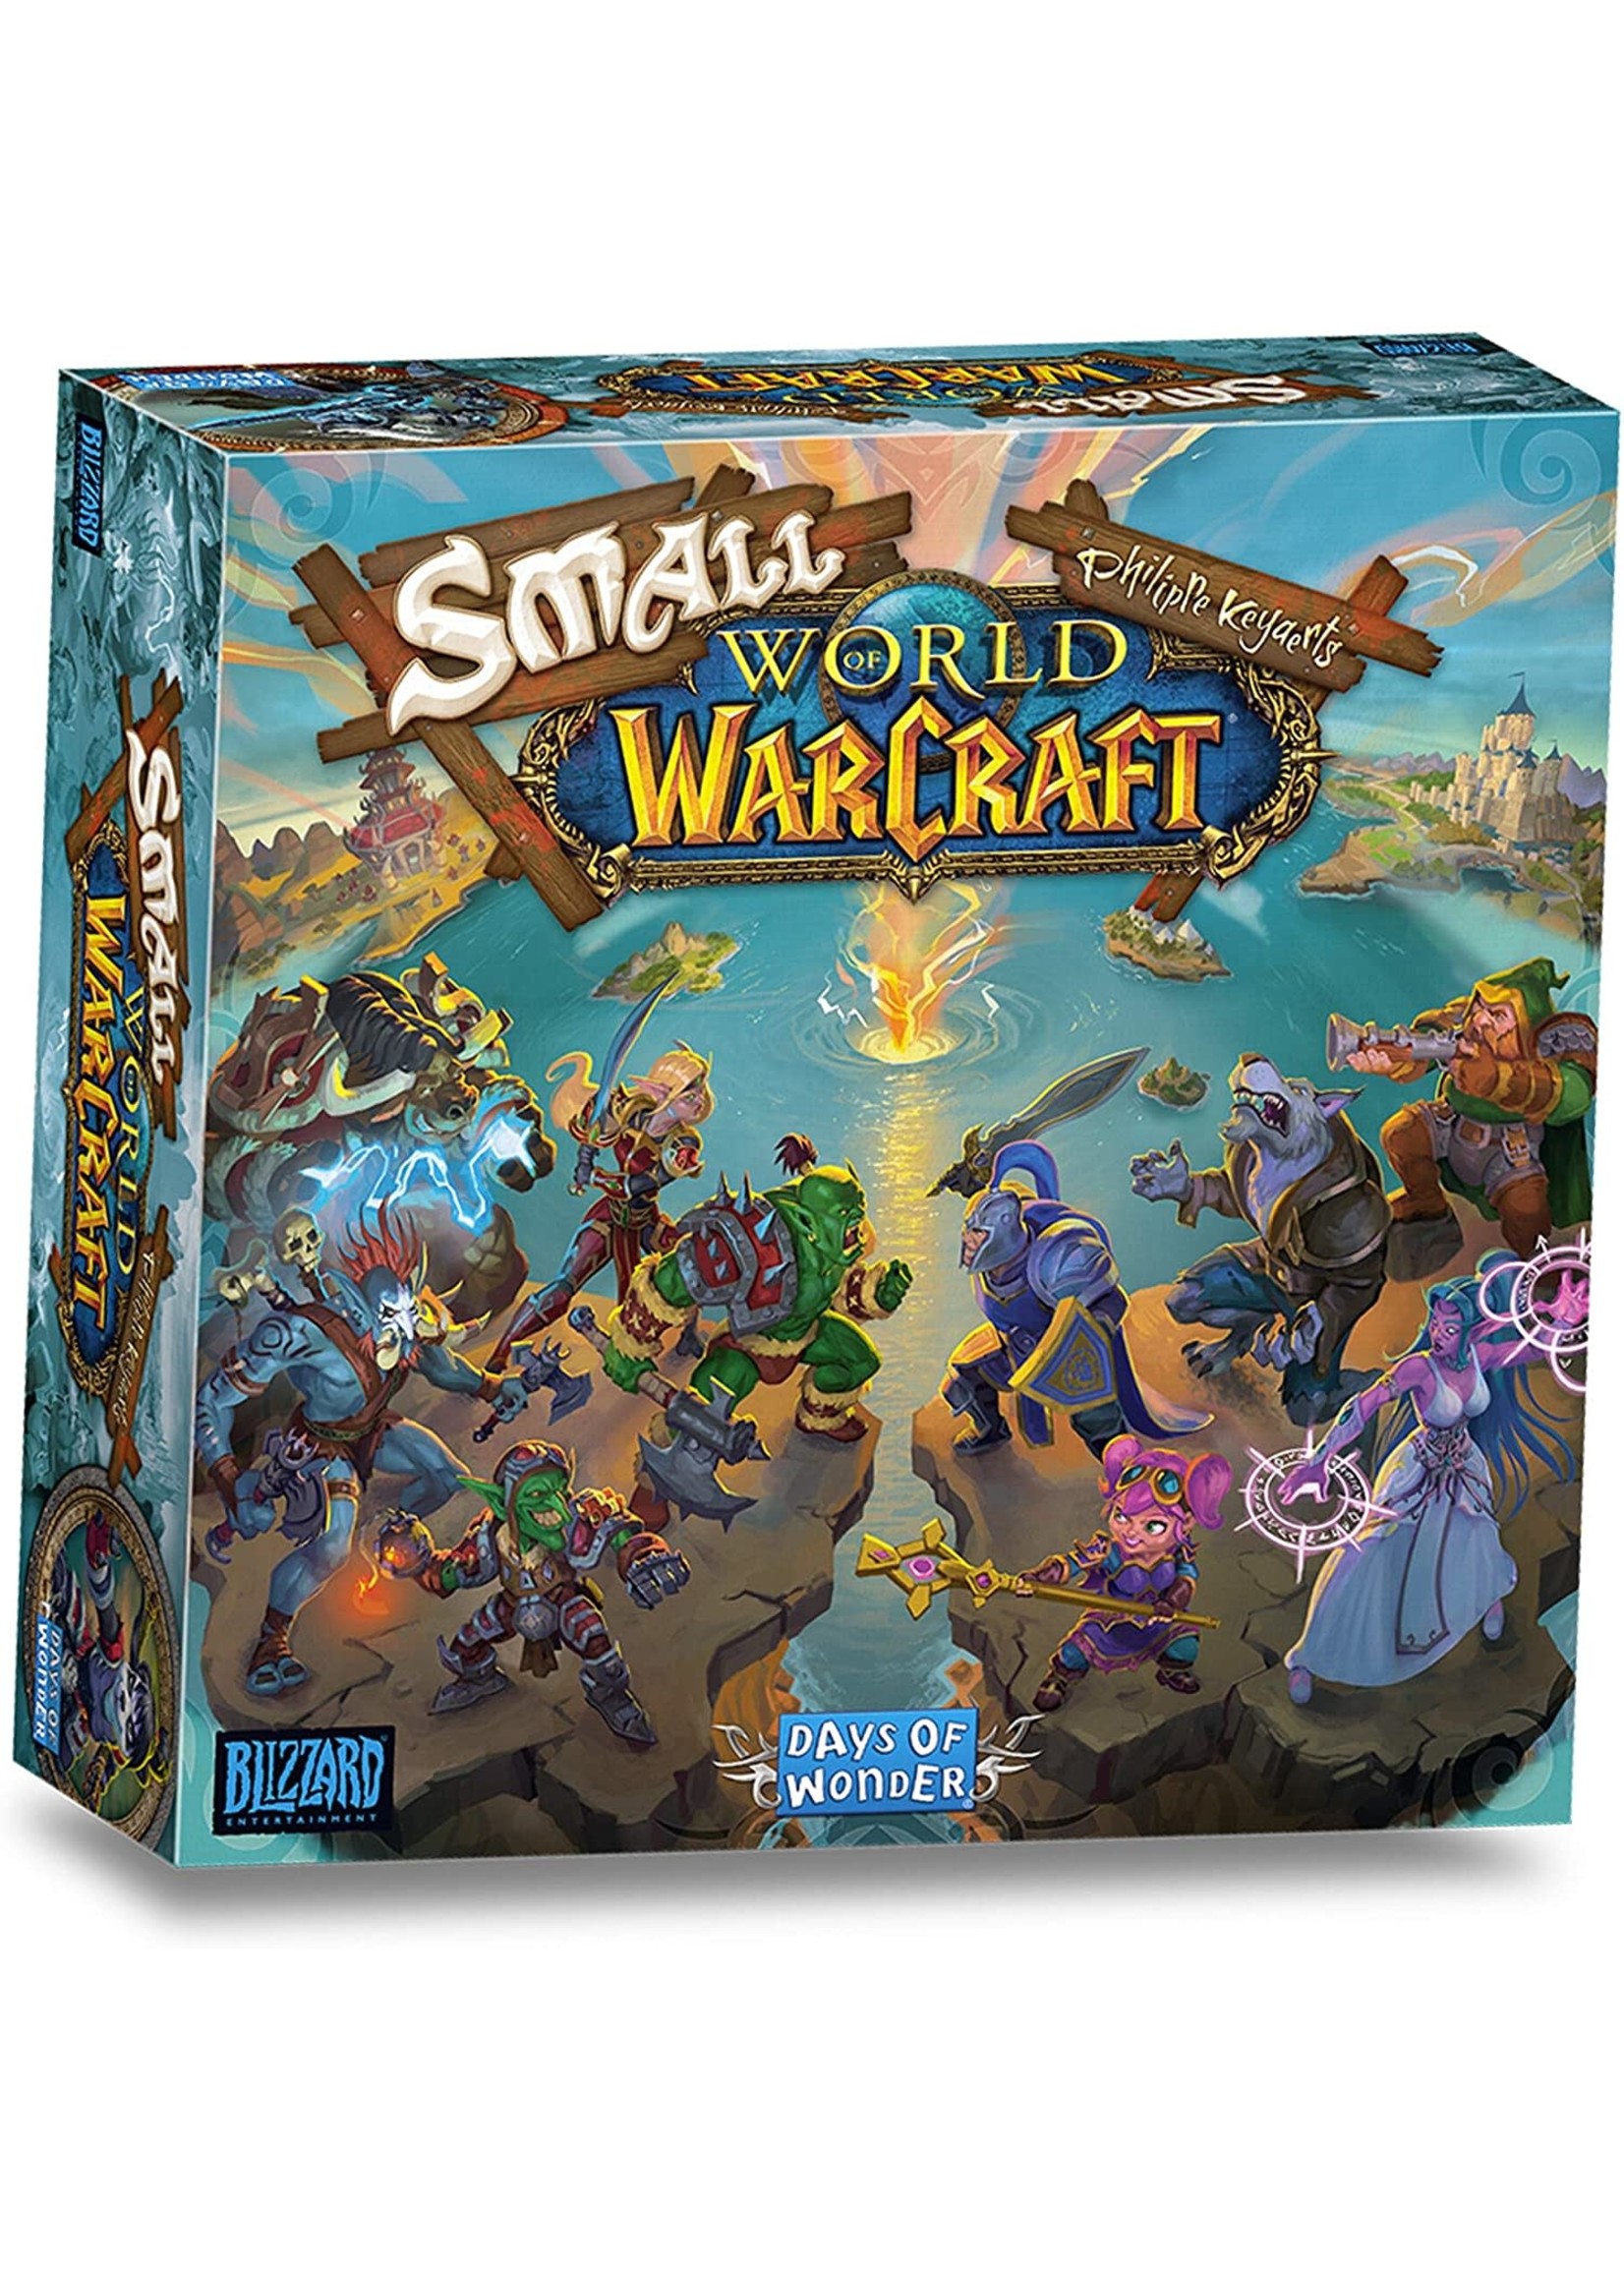 RENTAL - Small World of Warcraft 4 lb 9.7 oz